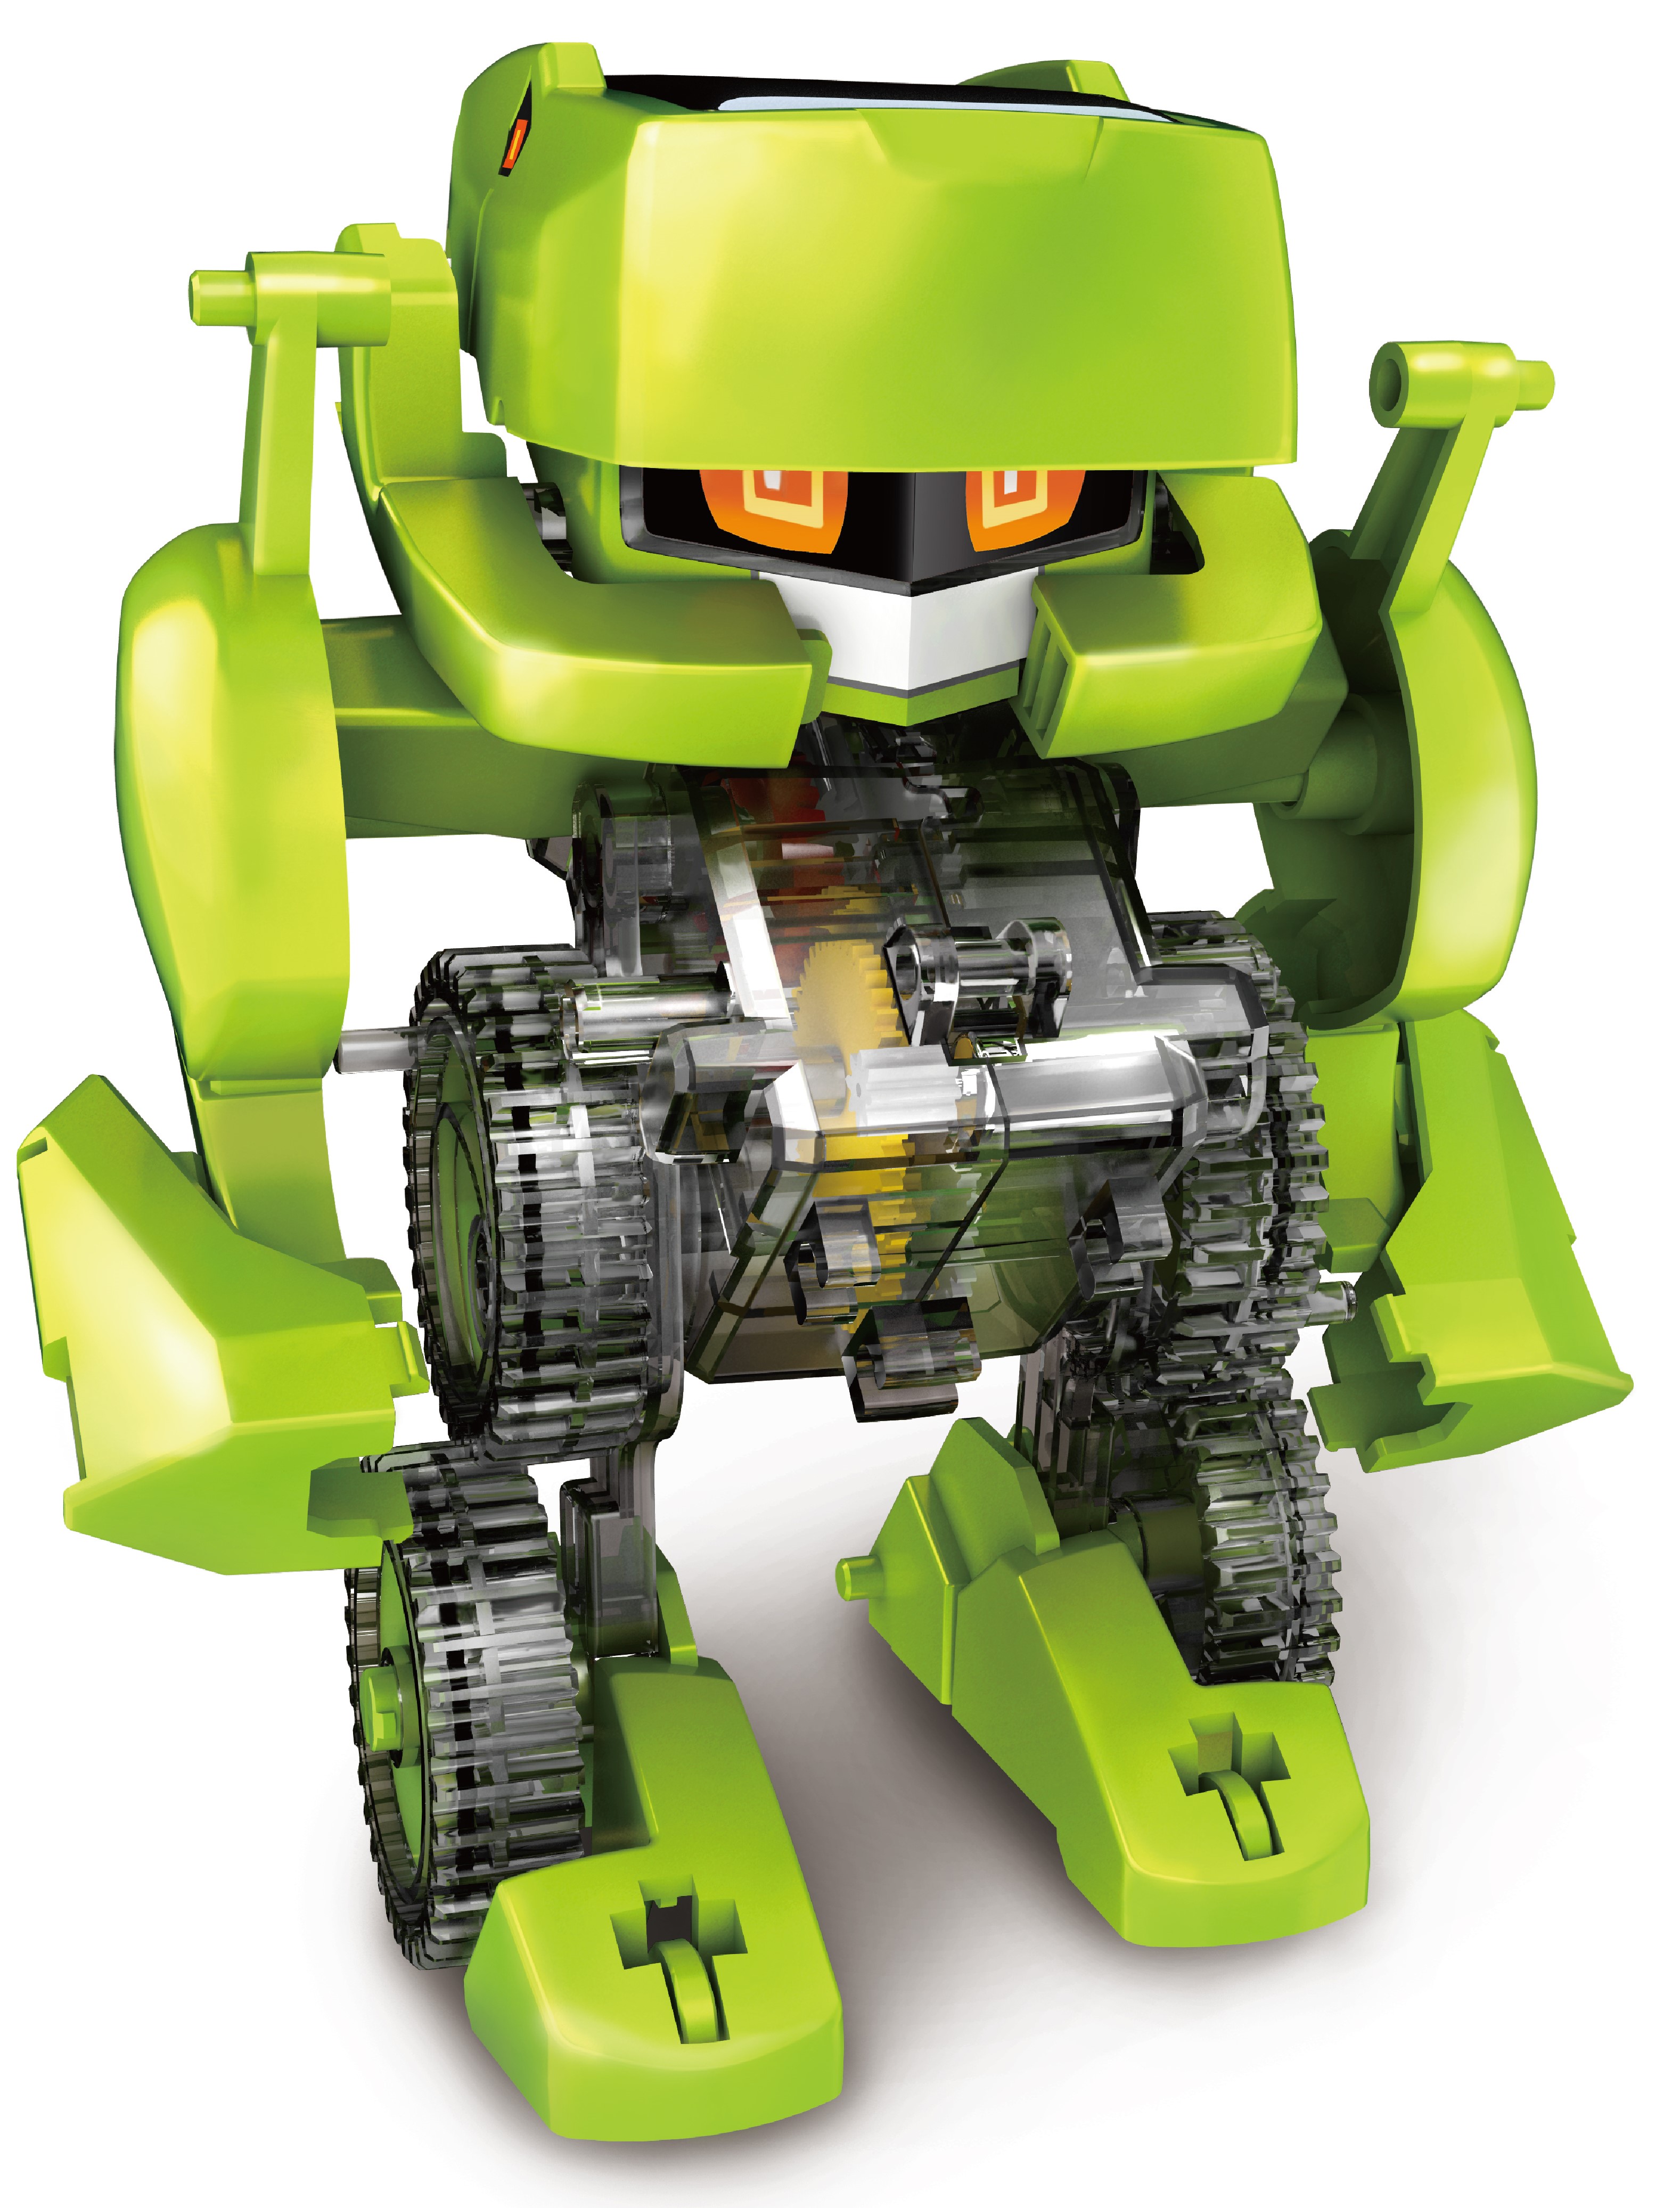 Teach Tech™ Meta.4 Solar Robot | 4-in-1 Robot Kit | STEM Educational Toy for Kids 8+ - image 6 of 9